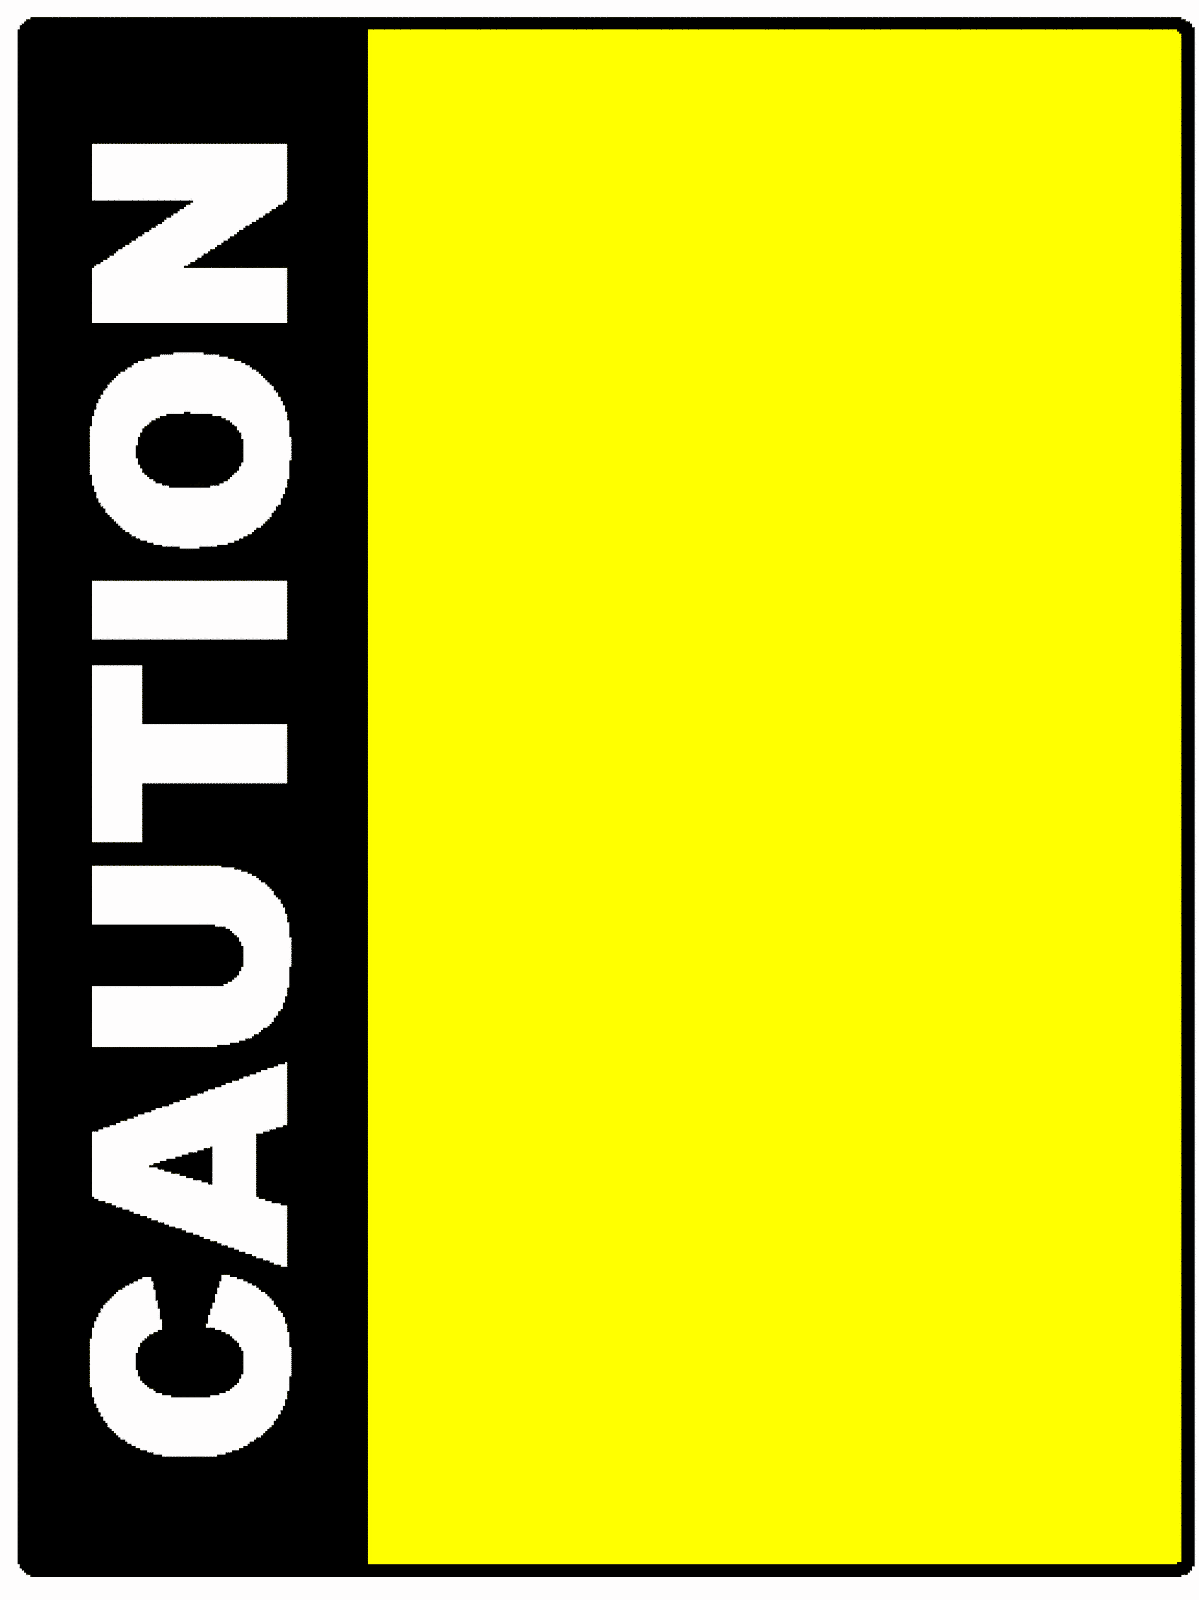 Caution tape clipart border - ClipartFox